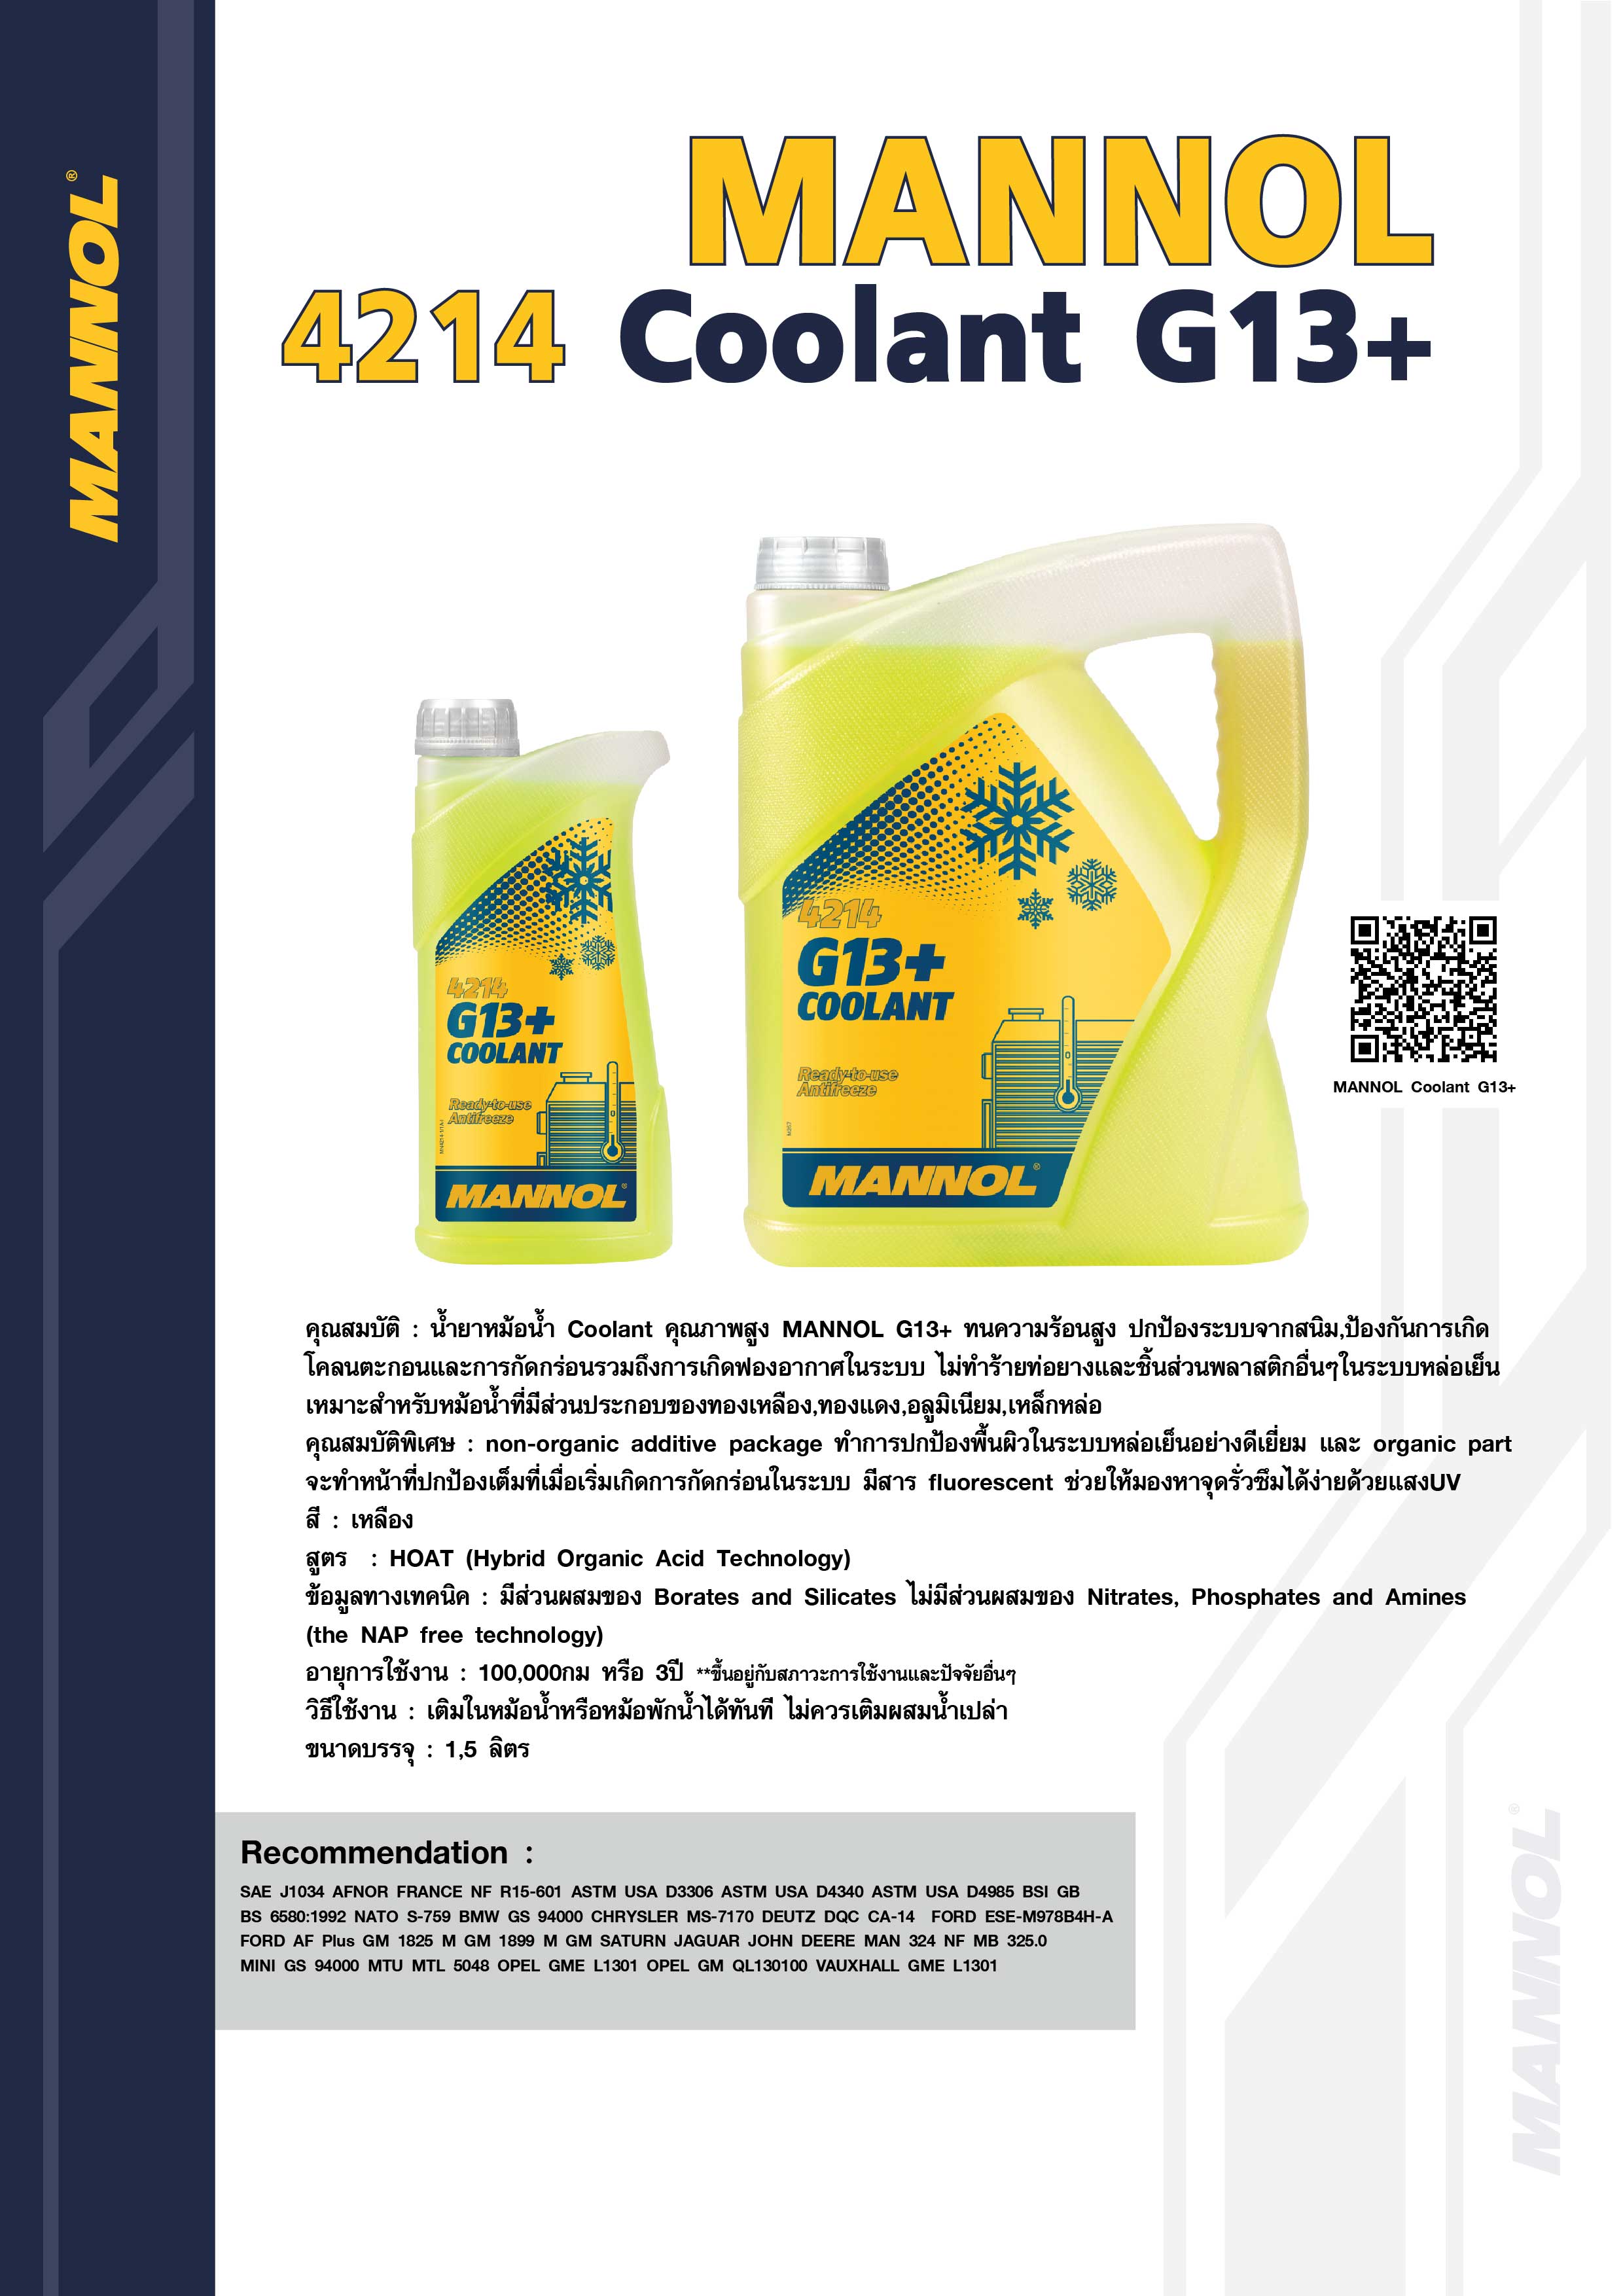 Mannol Coolant G13